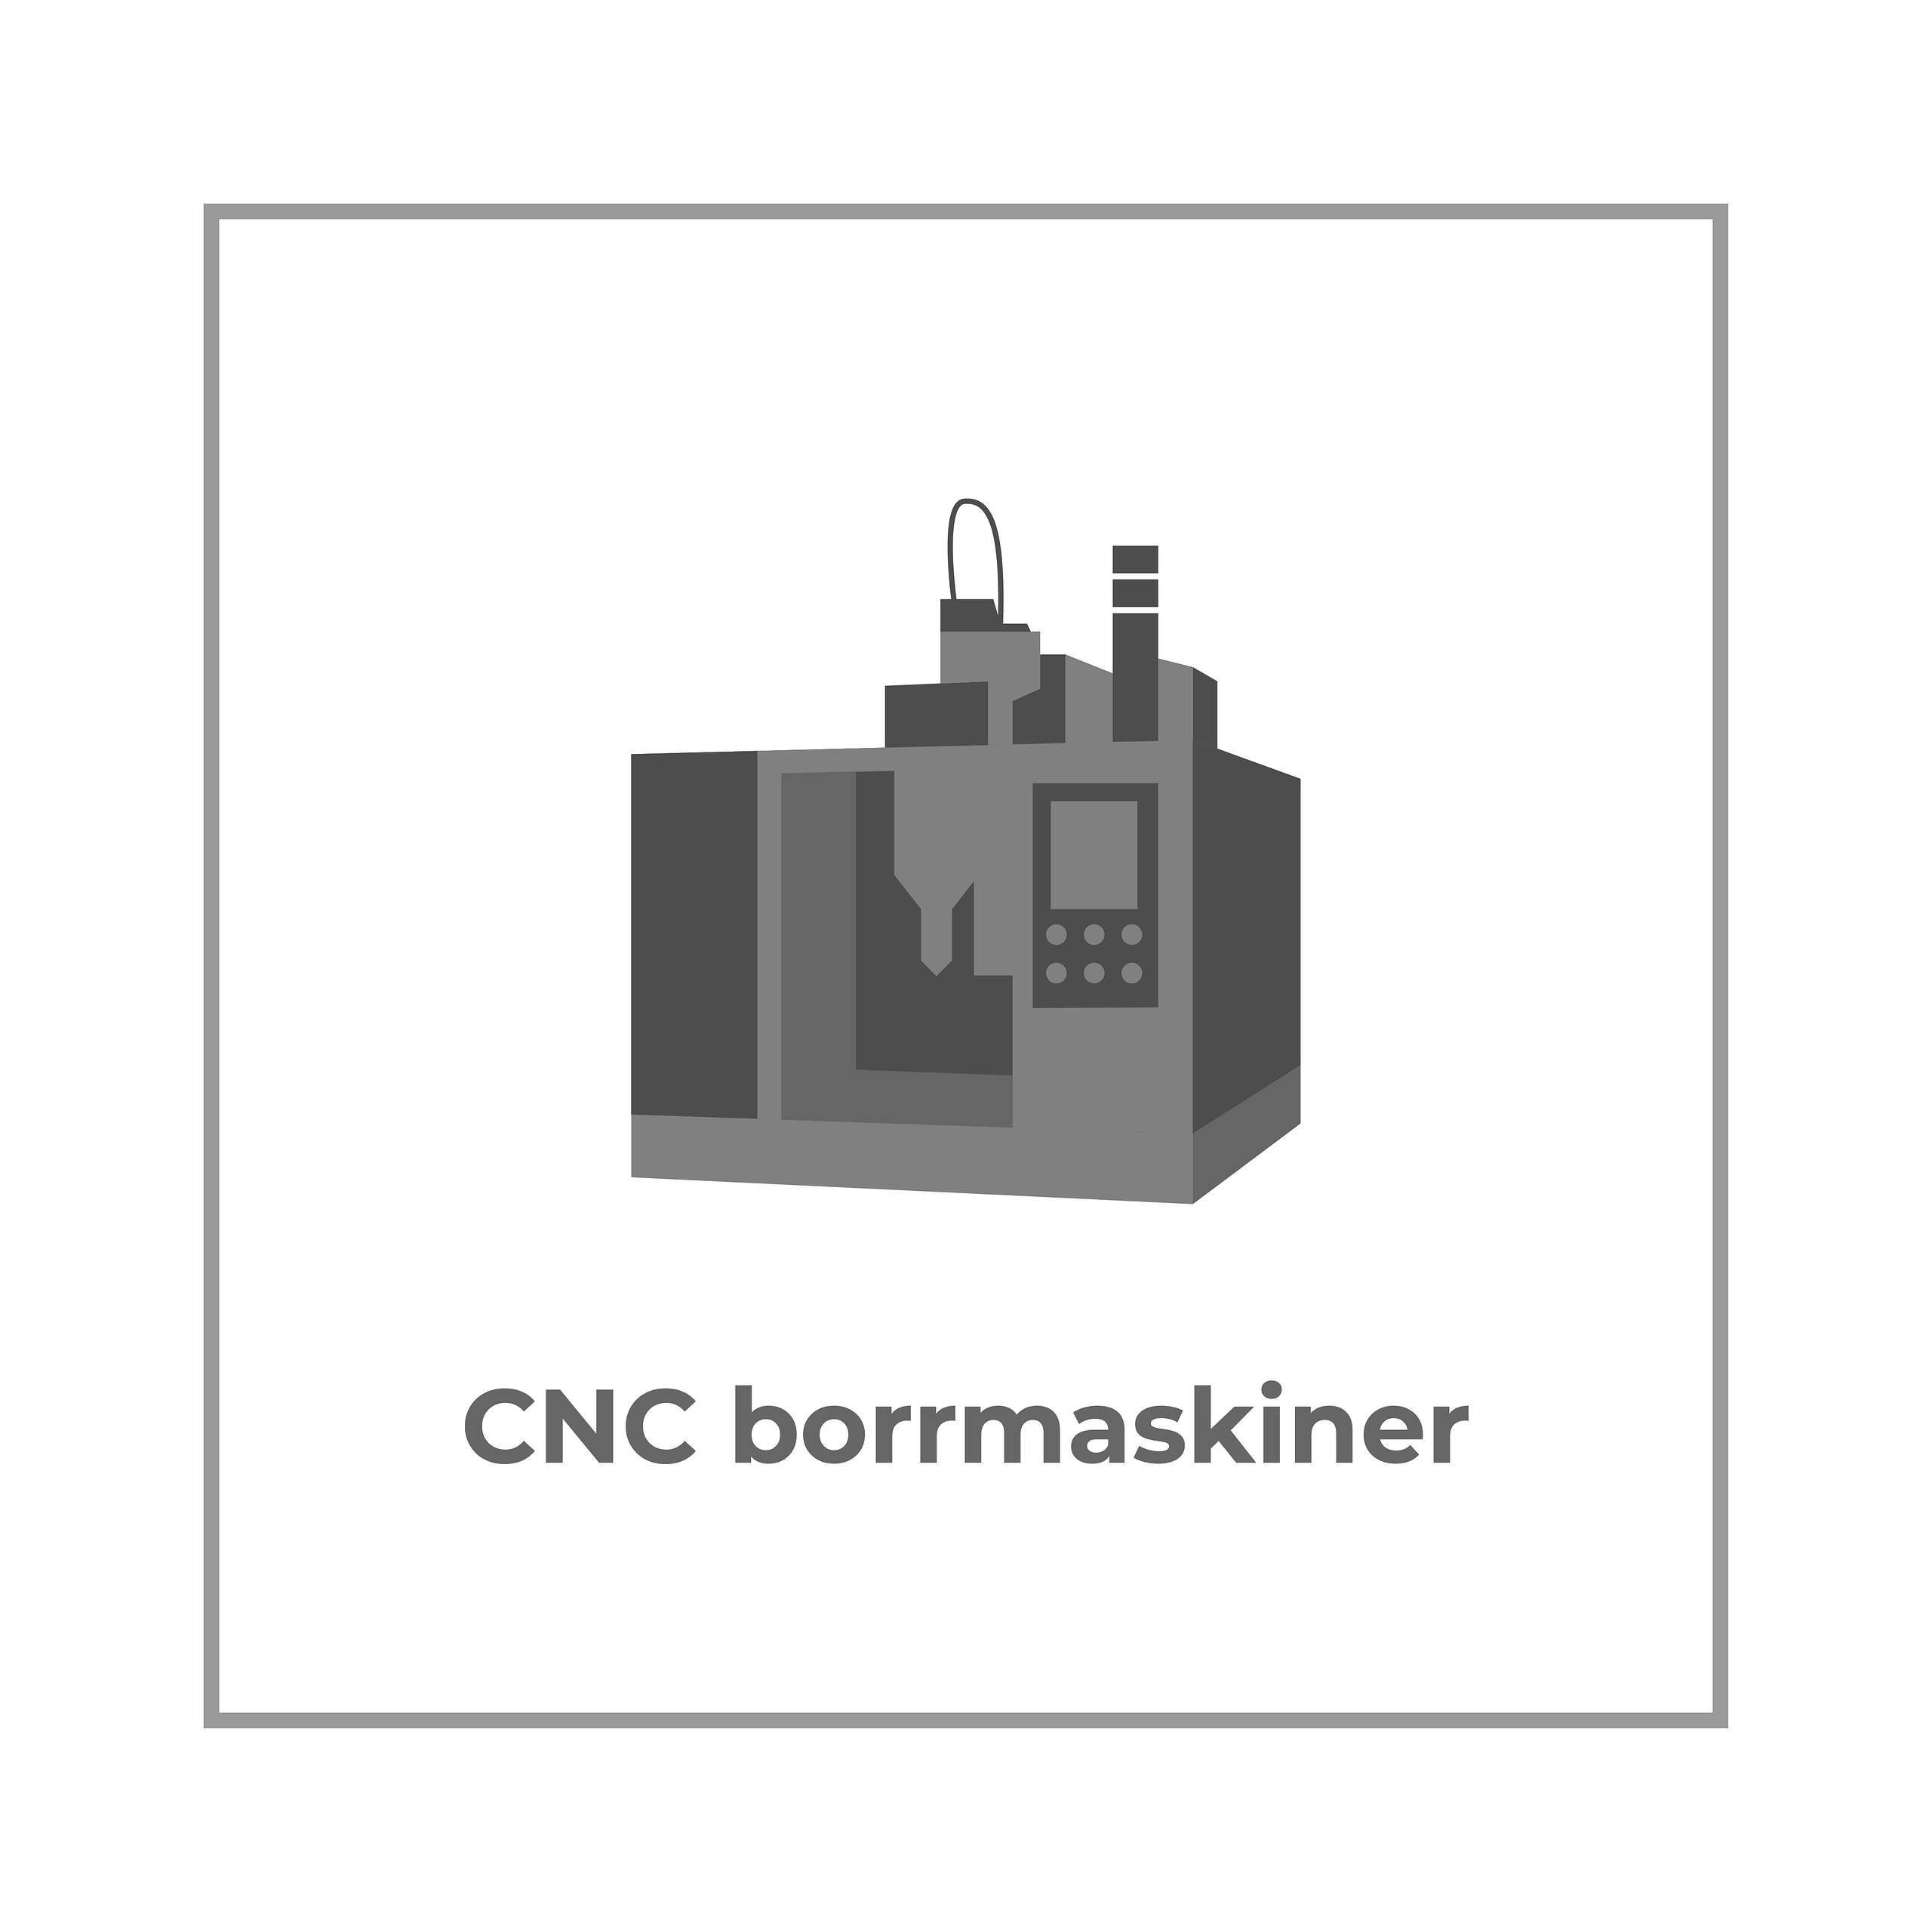 CNC borrmaskiner